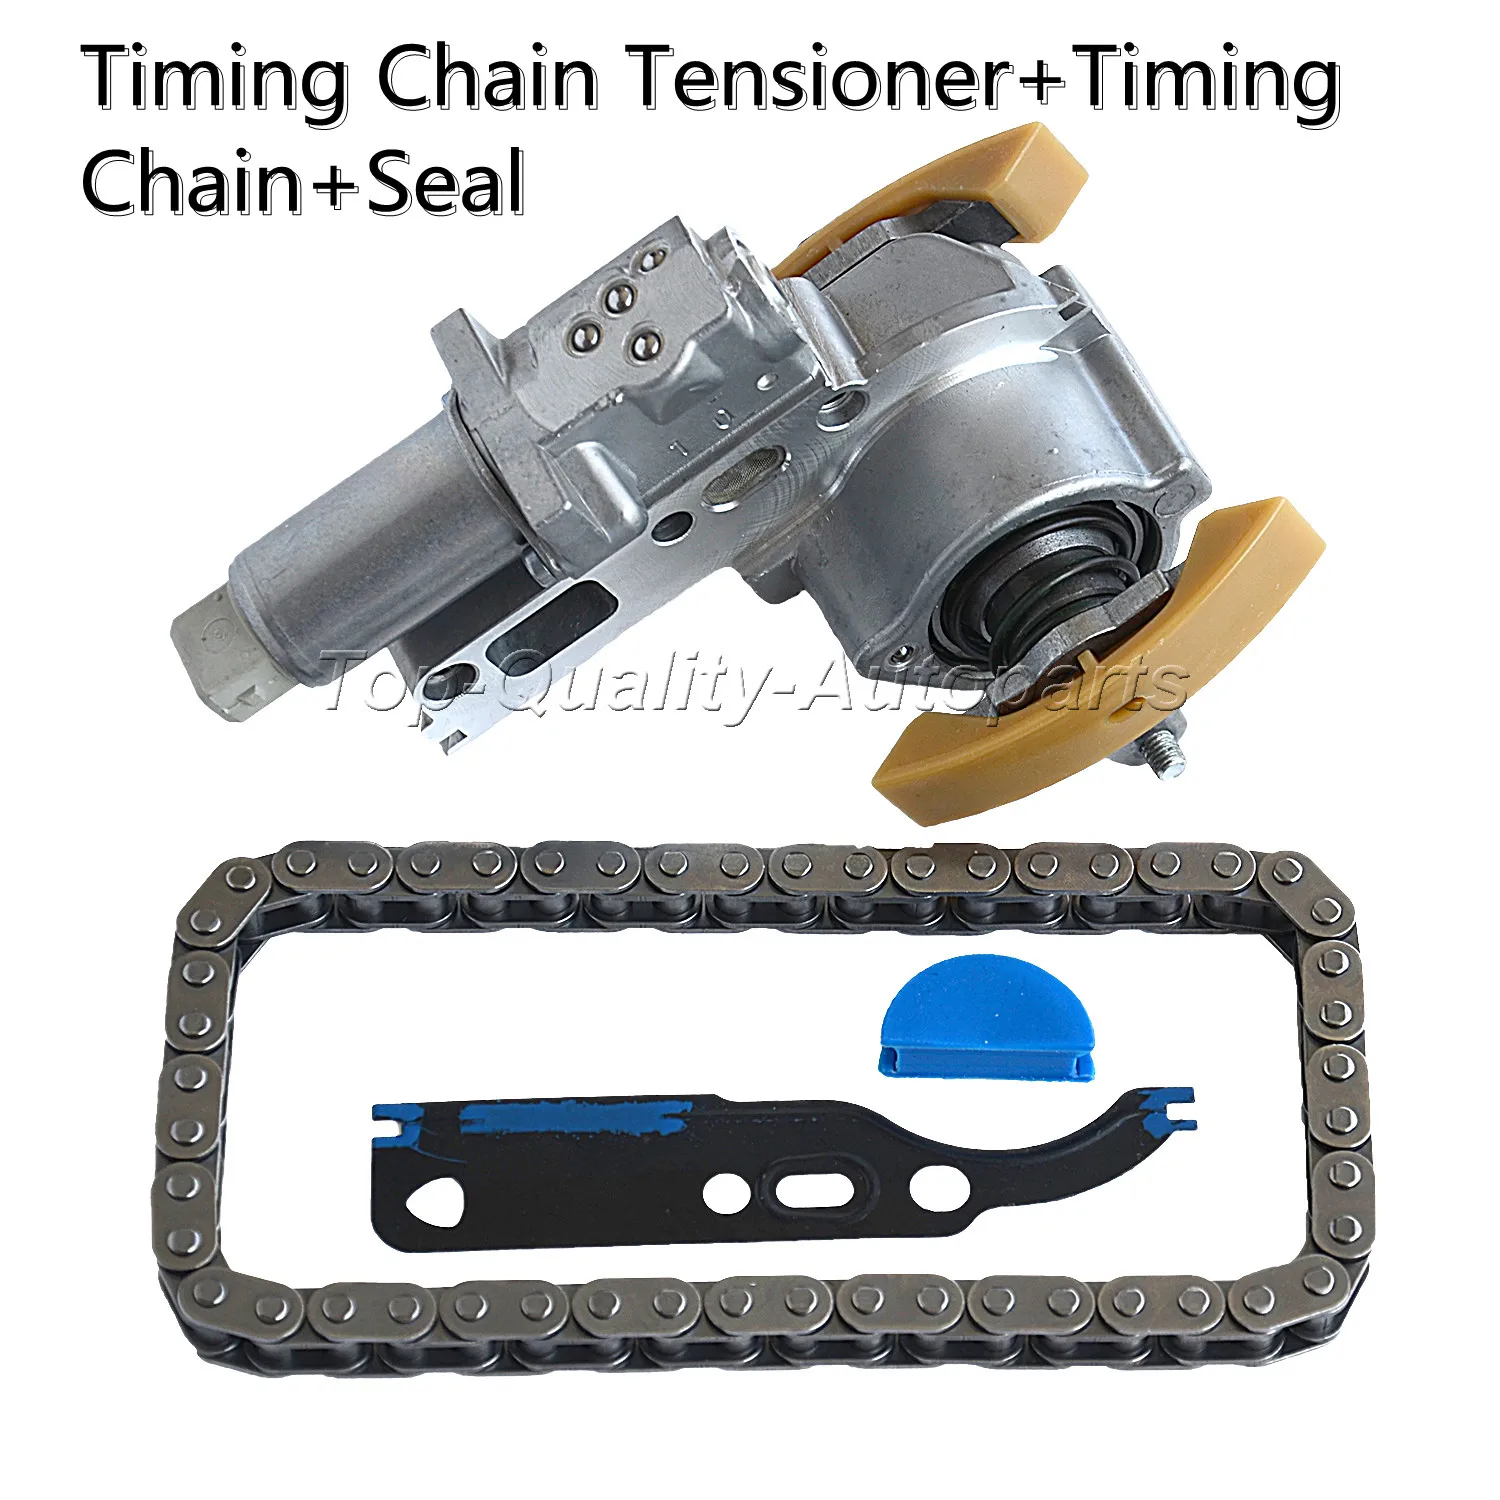 

AP01 Timing Chain Tensioner+Chain+Gasket for Audi A4 TT VW 1.8L 058109088B, 058109088E, 058109088L, 058109088K, 058109088D